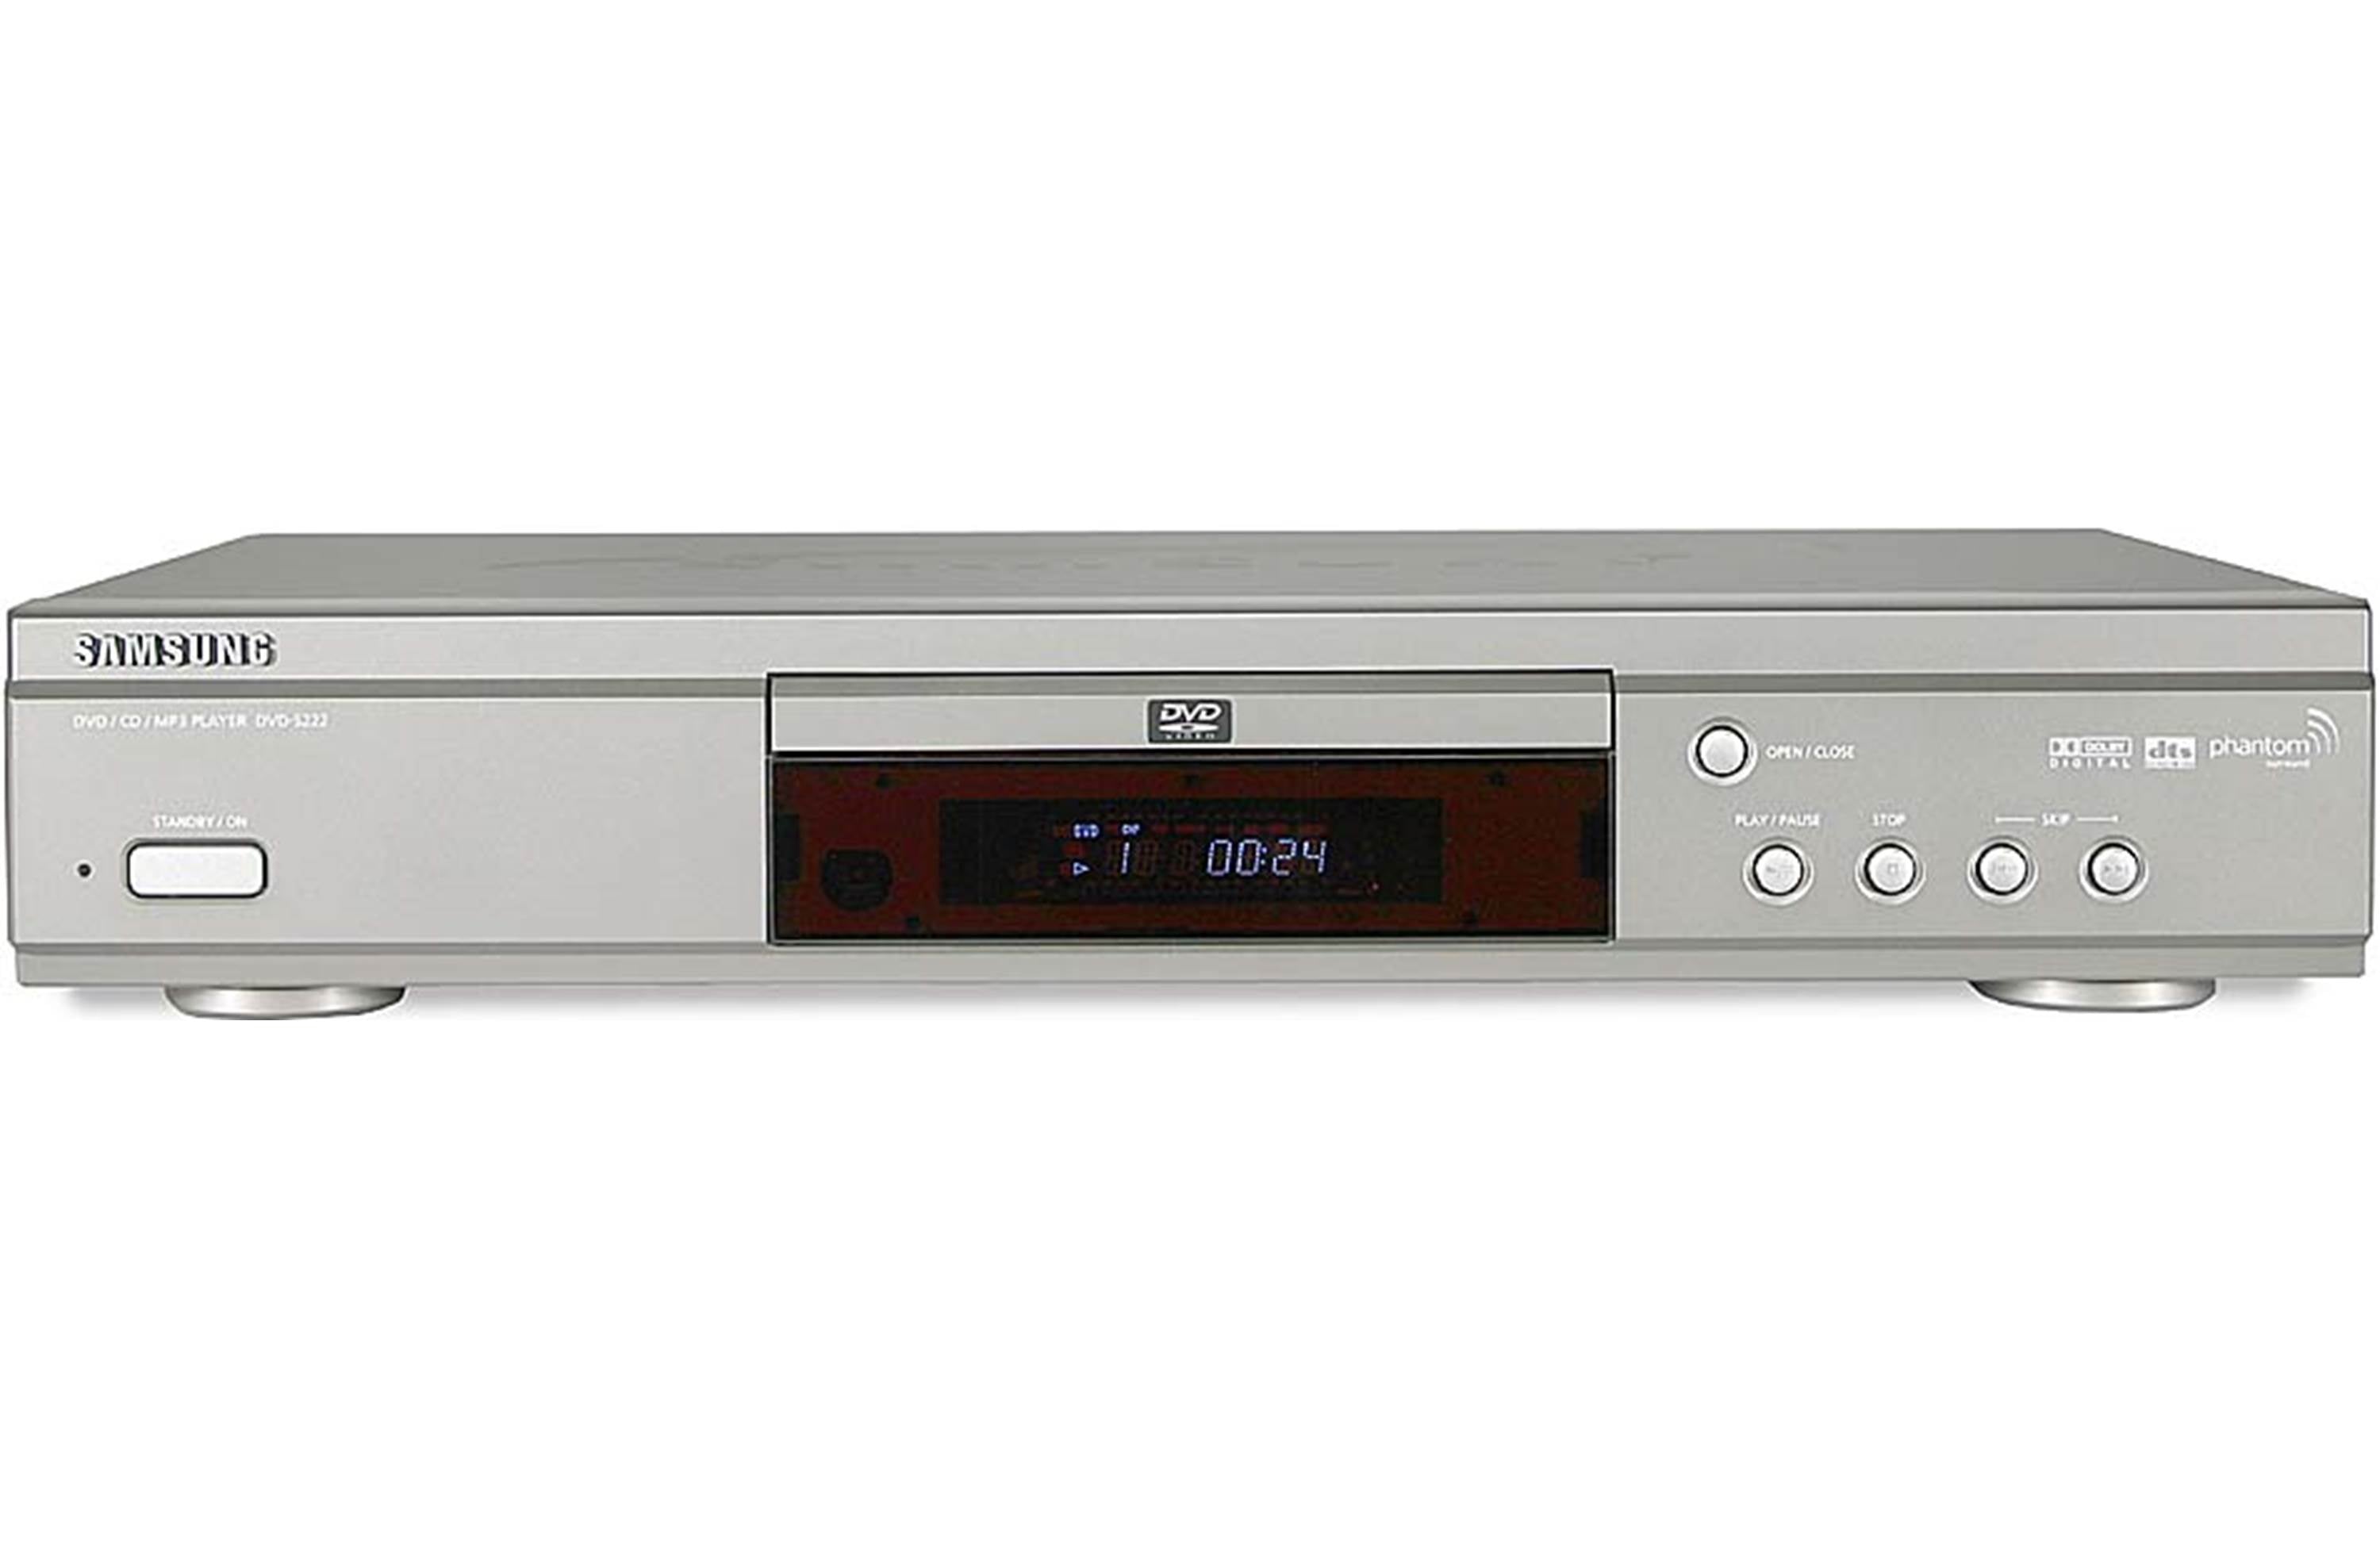 Samsung DVDS222 DVD Player